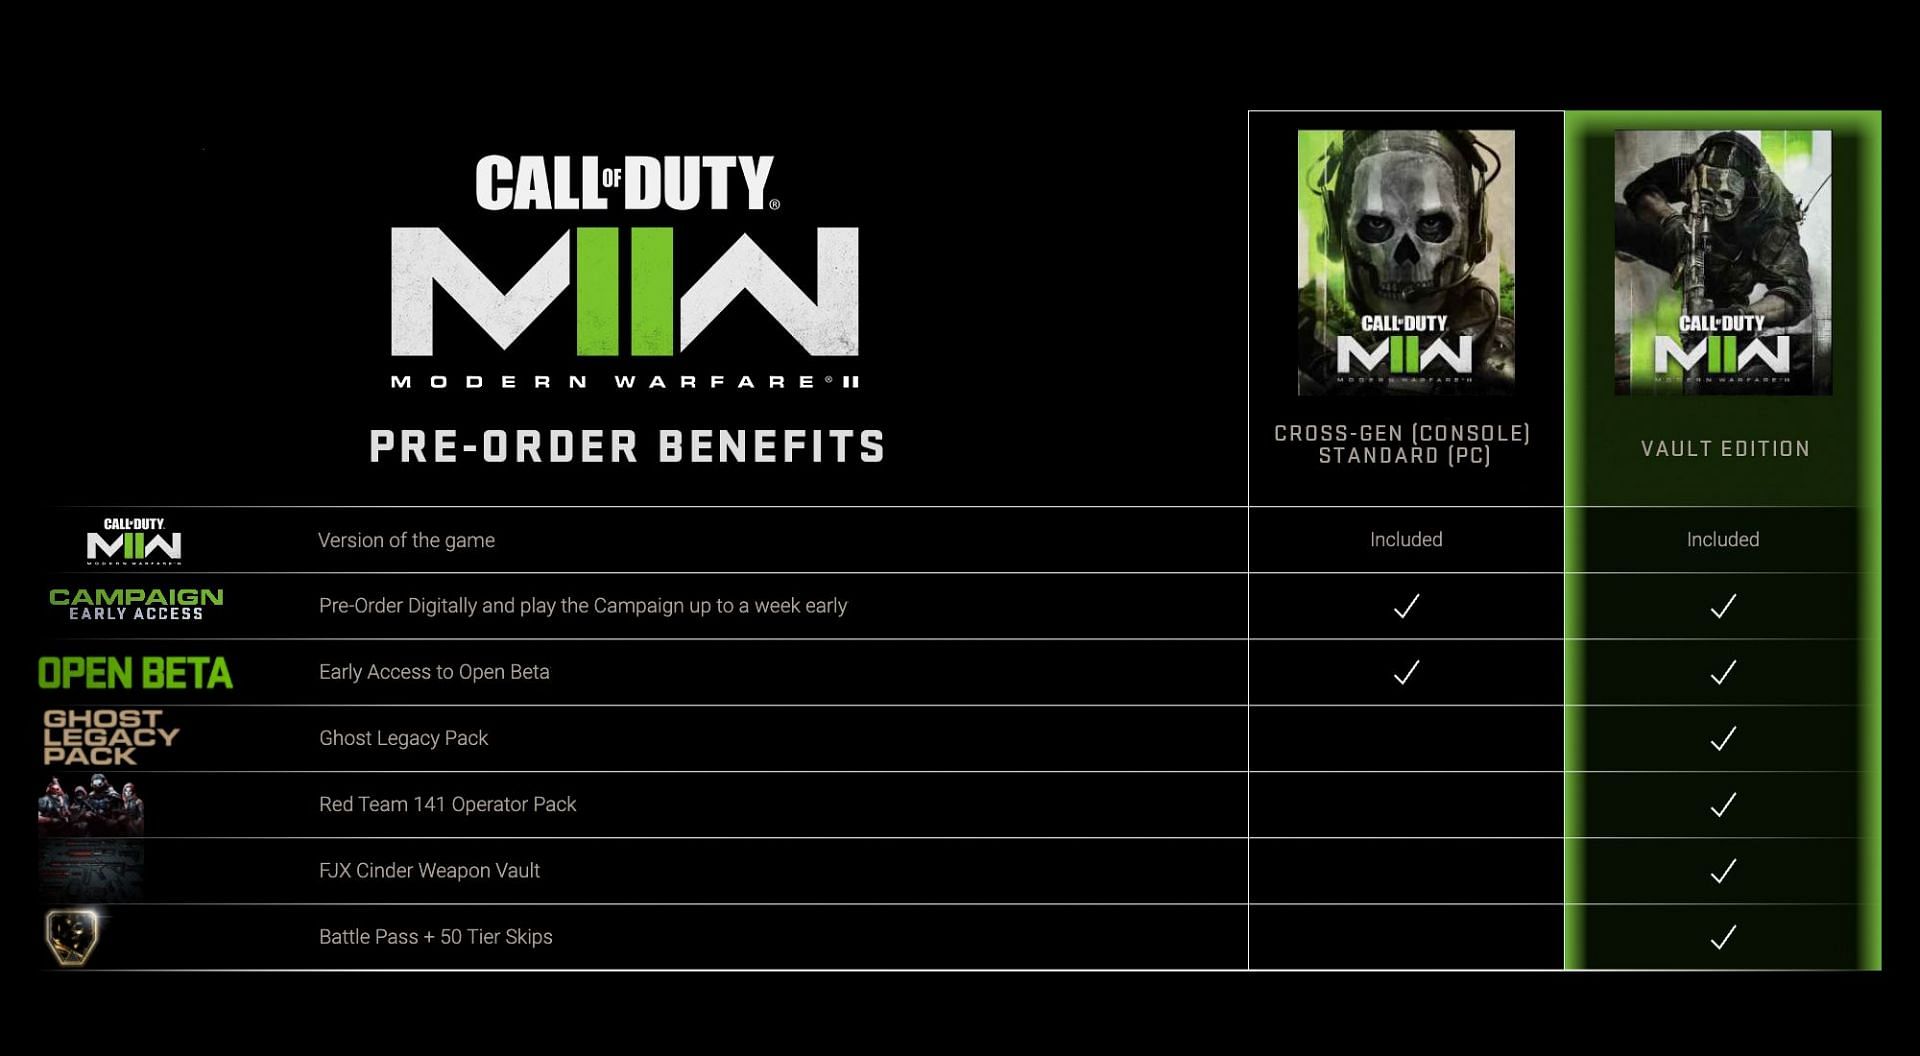 Modern Warfare 2 Standard Edition vs Vault Edition benefits (Image via Activision)